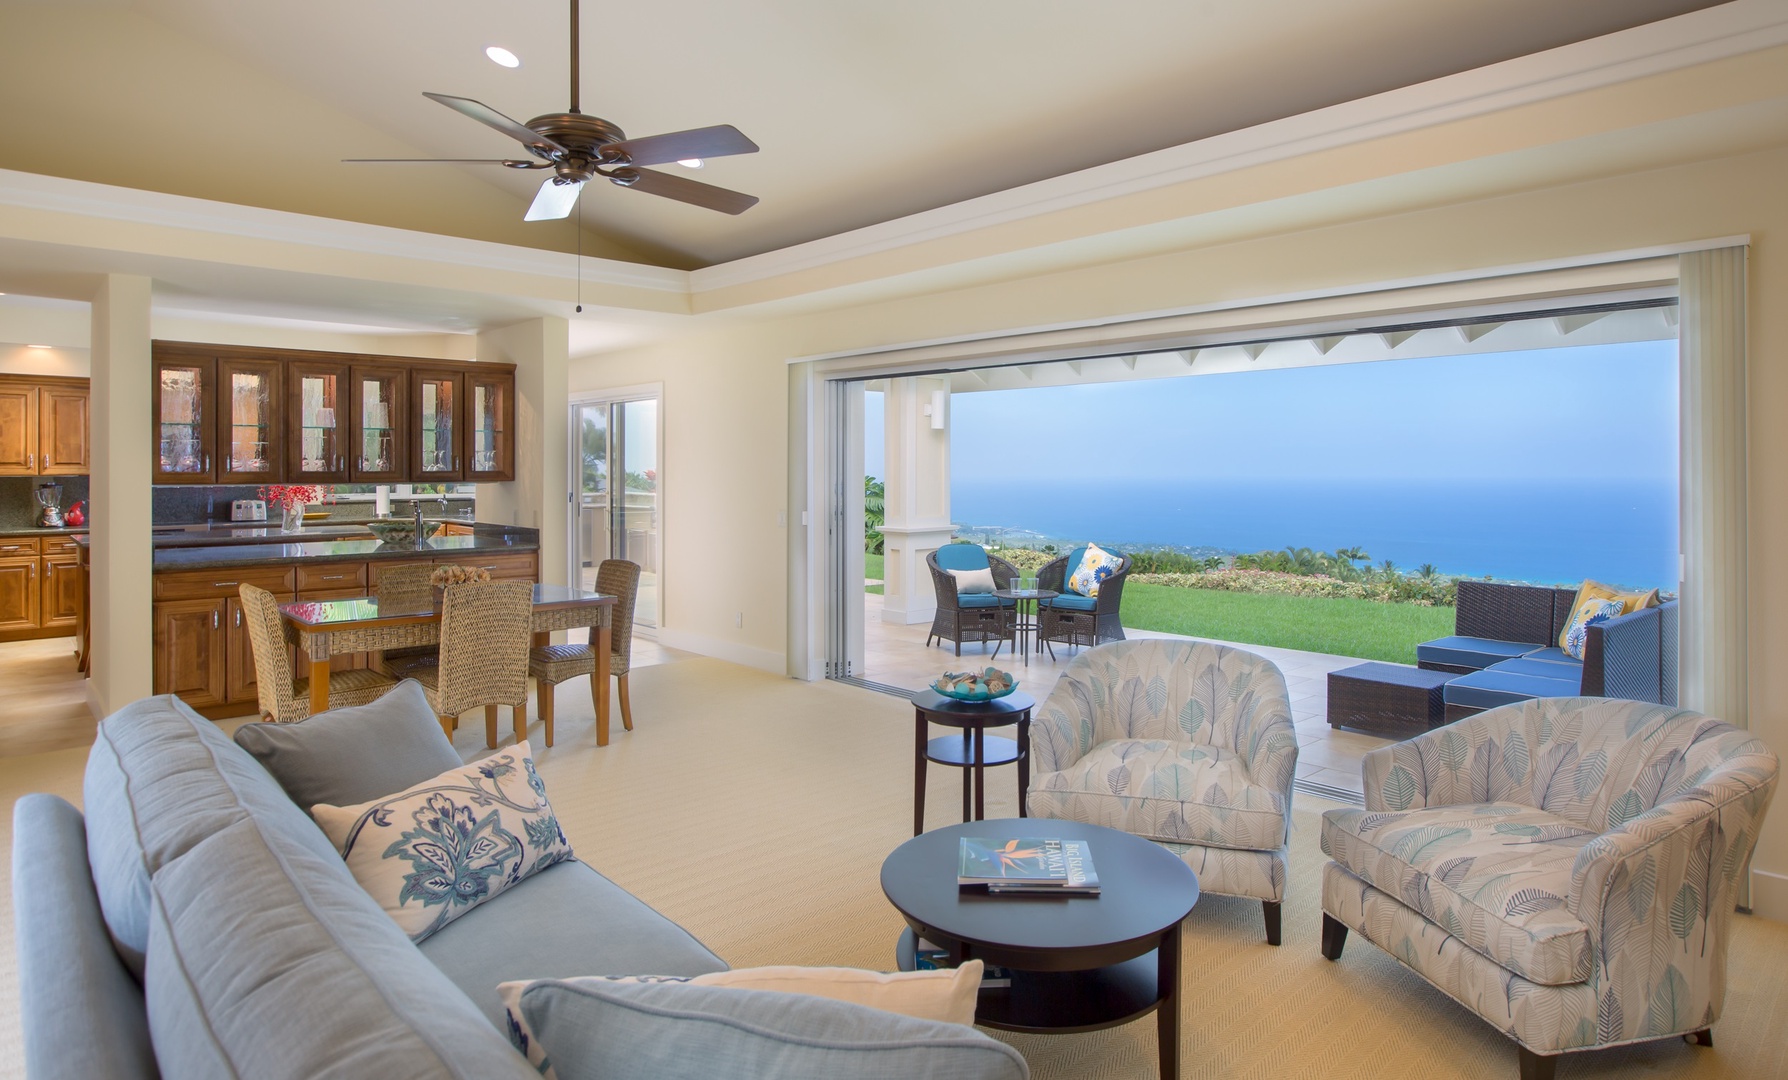 Kailua Kona Vacation Rentals, Hale Maluhia (Big Island) - Open concept living for this amazing living room